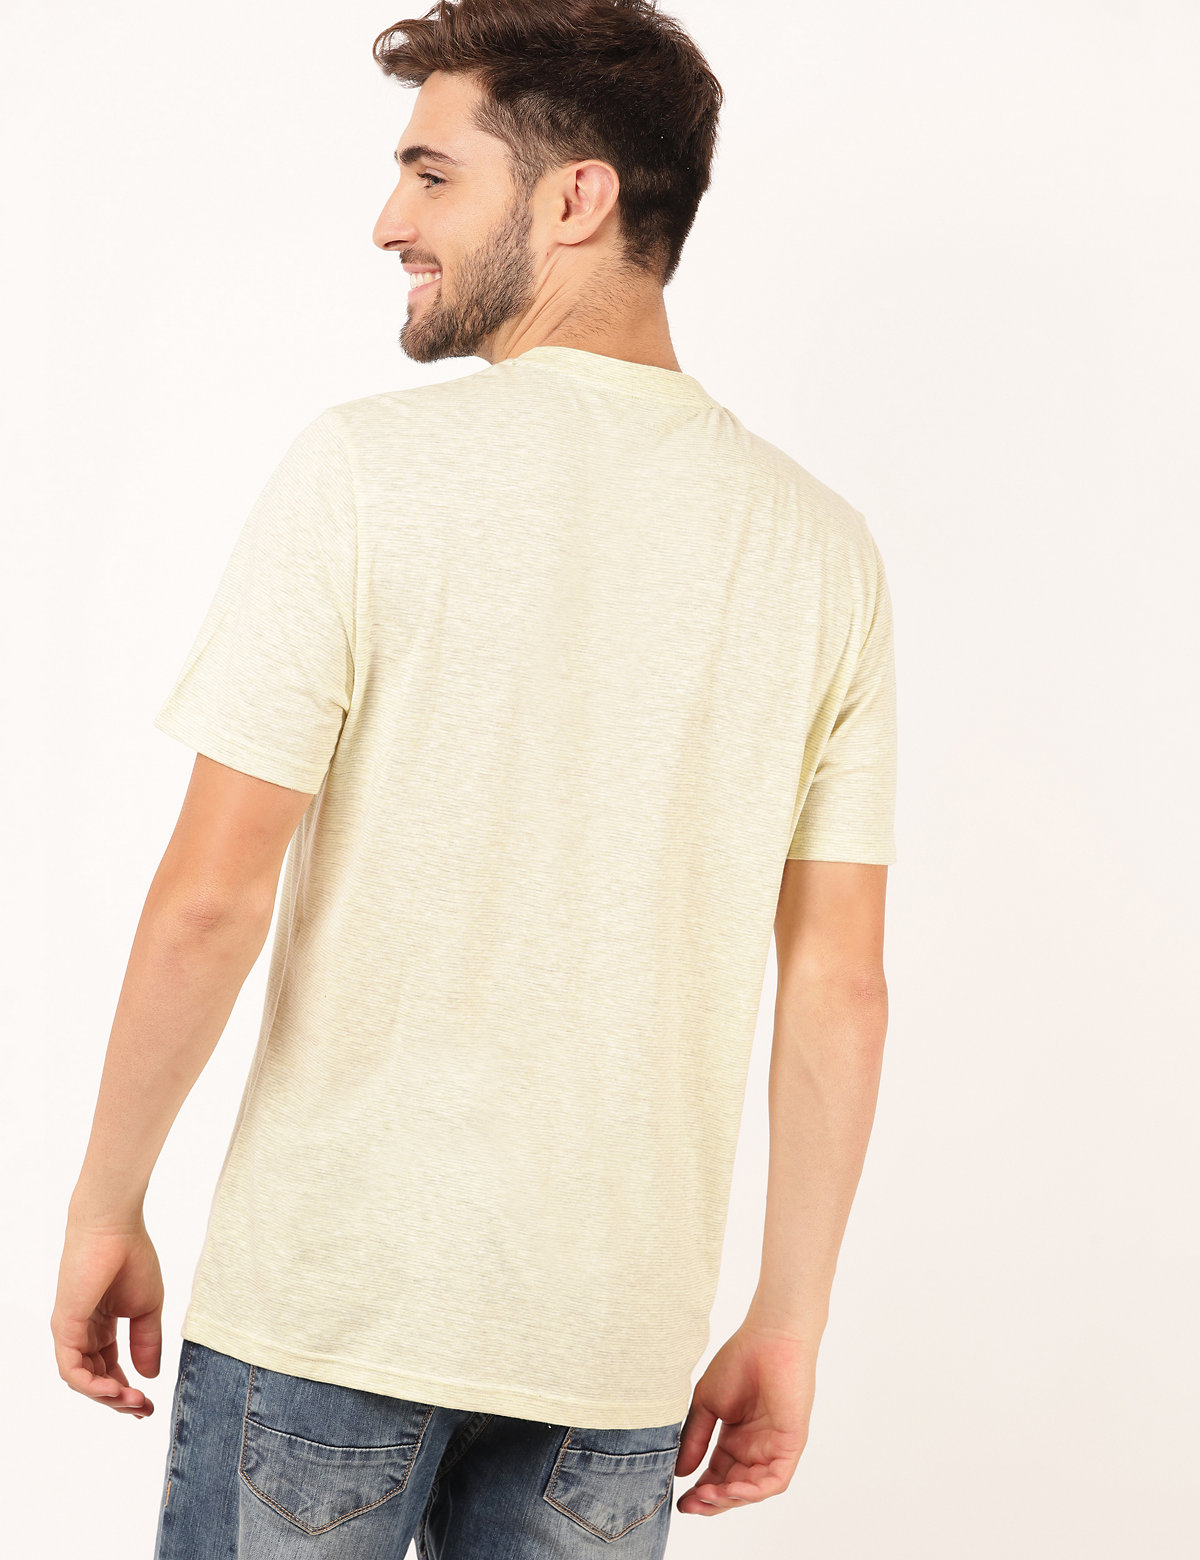 Pure Cotton Printed Round Neck T-Shirt